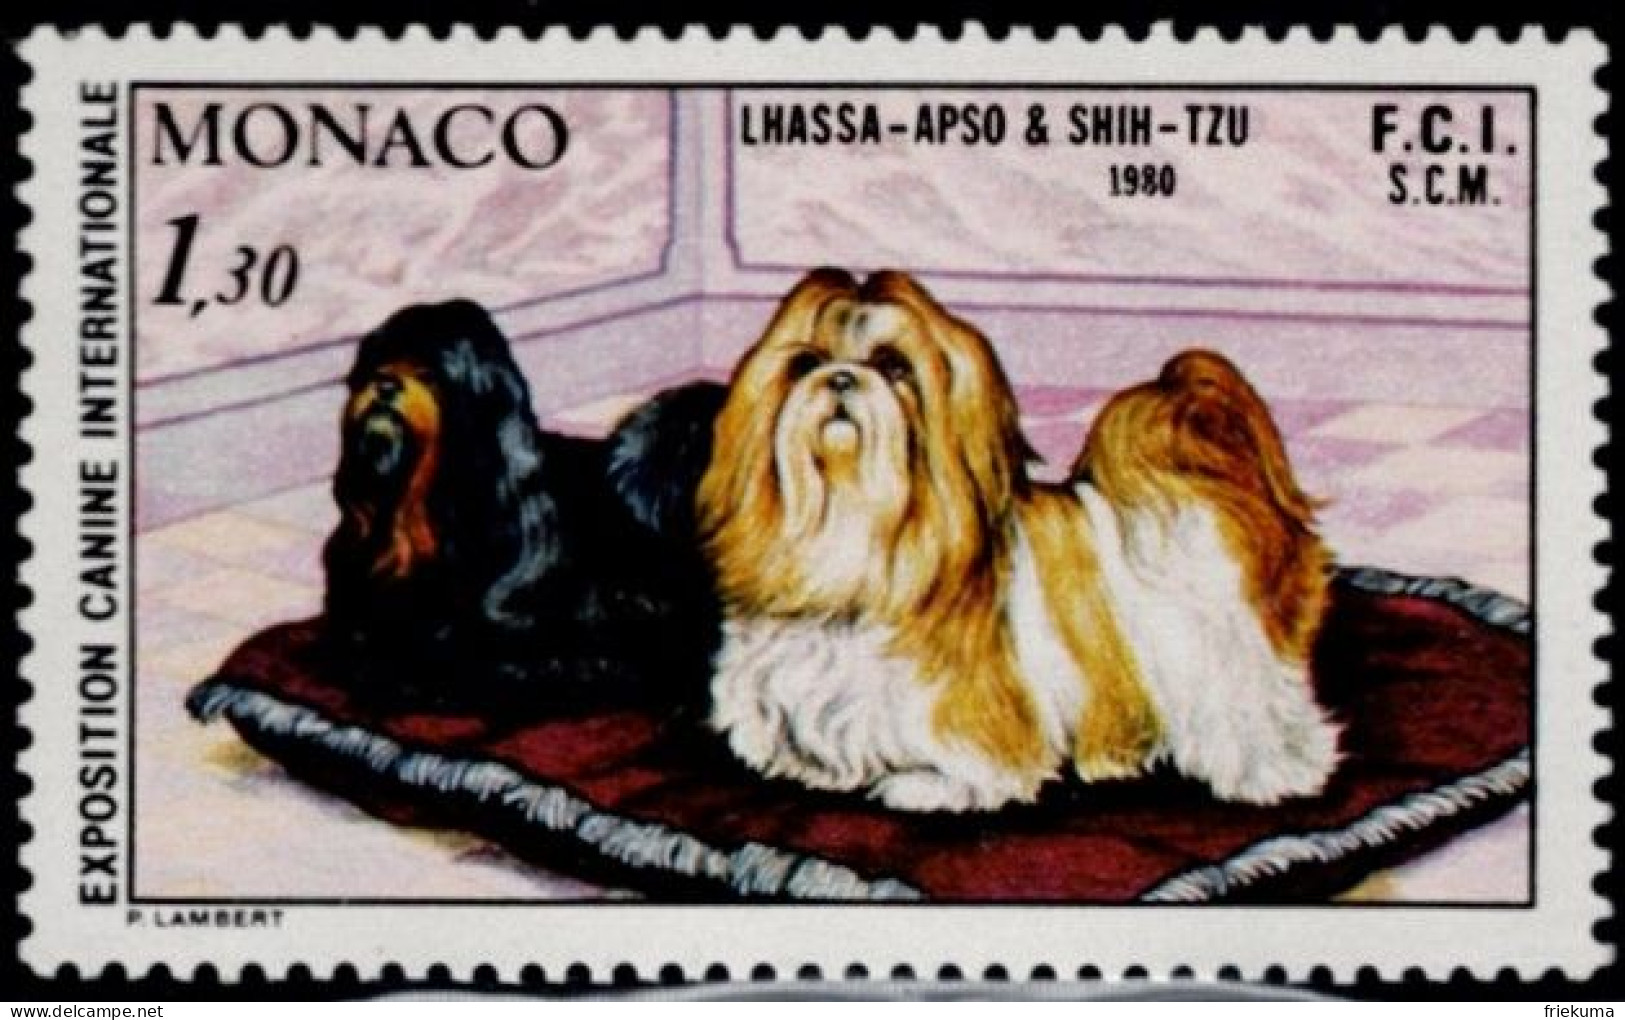 Monaco 1980, Exposition Canine Internationale/International Dog Show, Monte Carlo: Lhasa-Apso And Shih-Tzu, MiNr. 1035 - Dogs